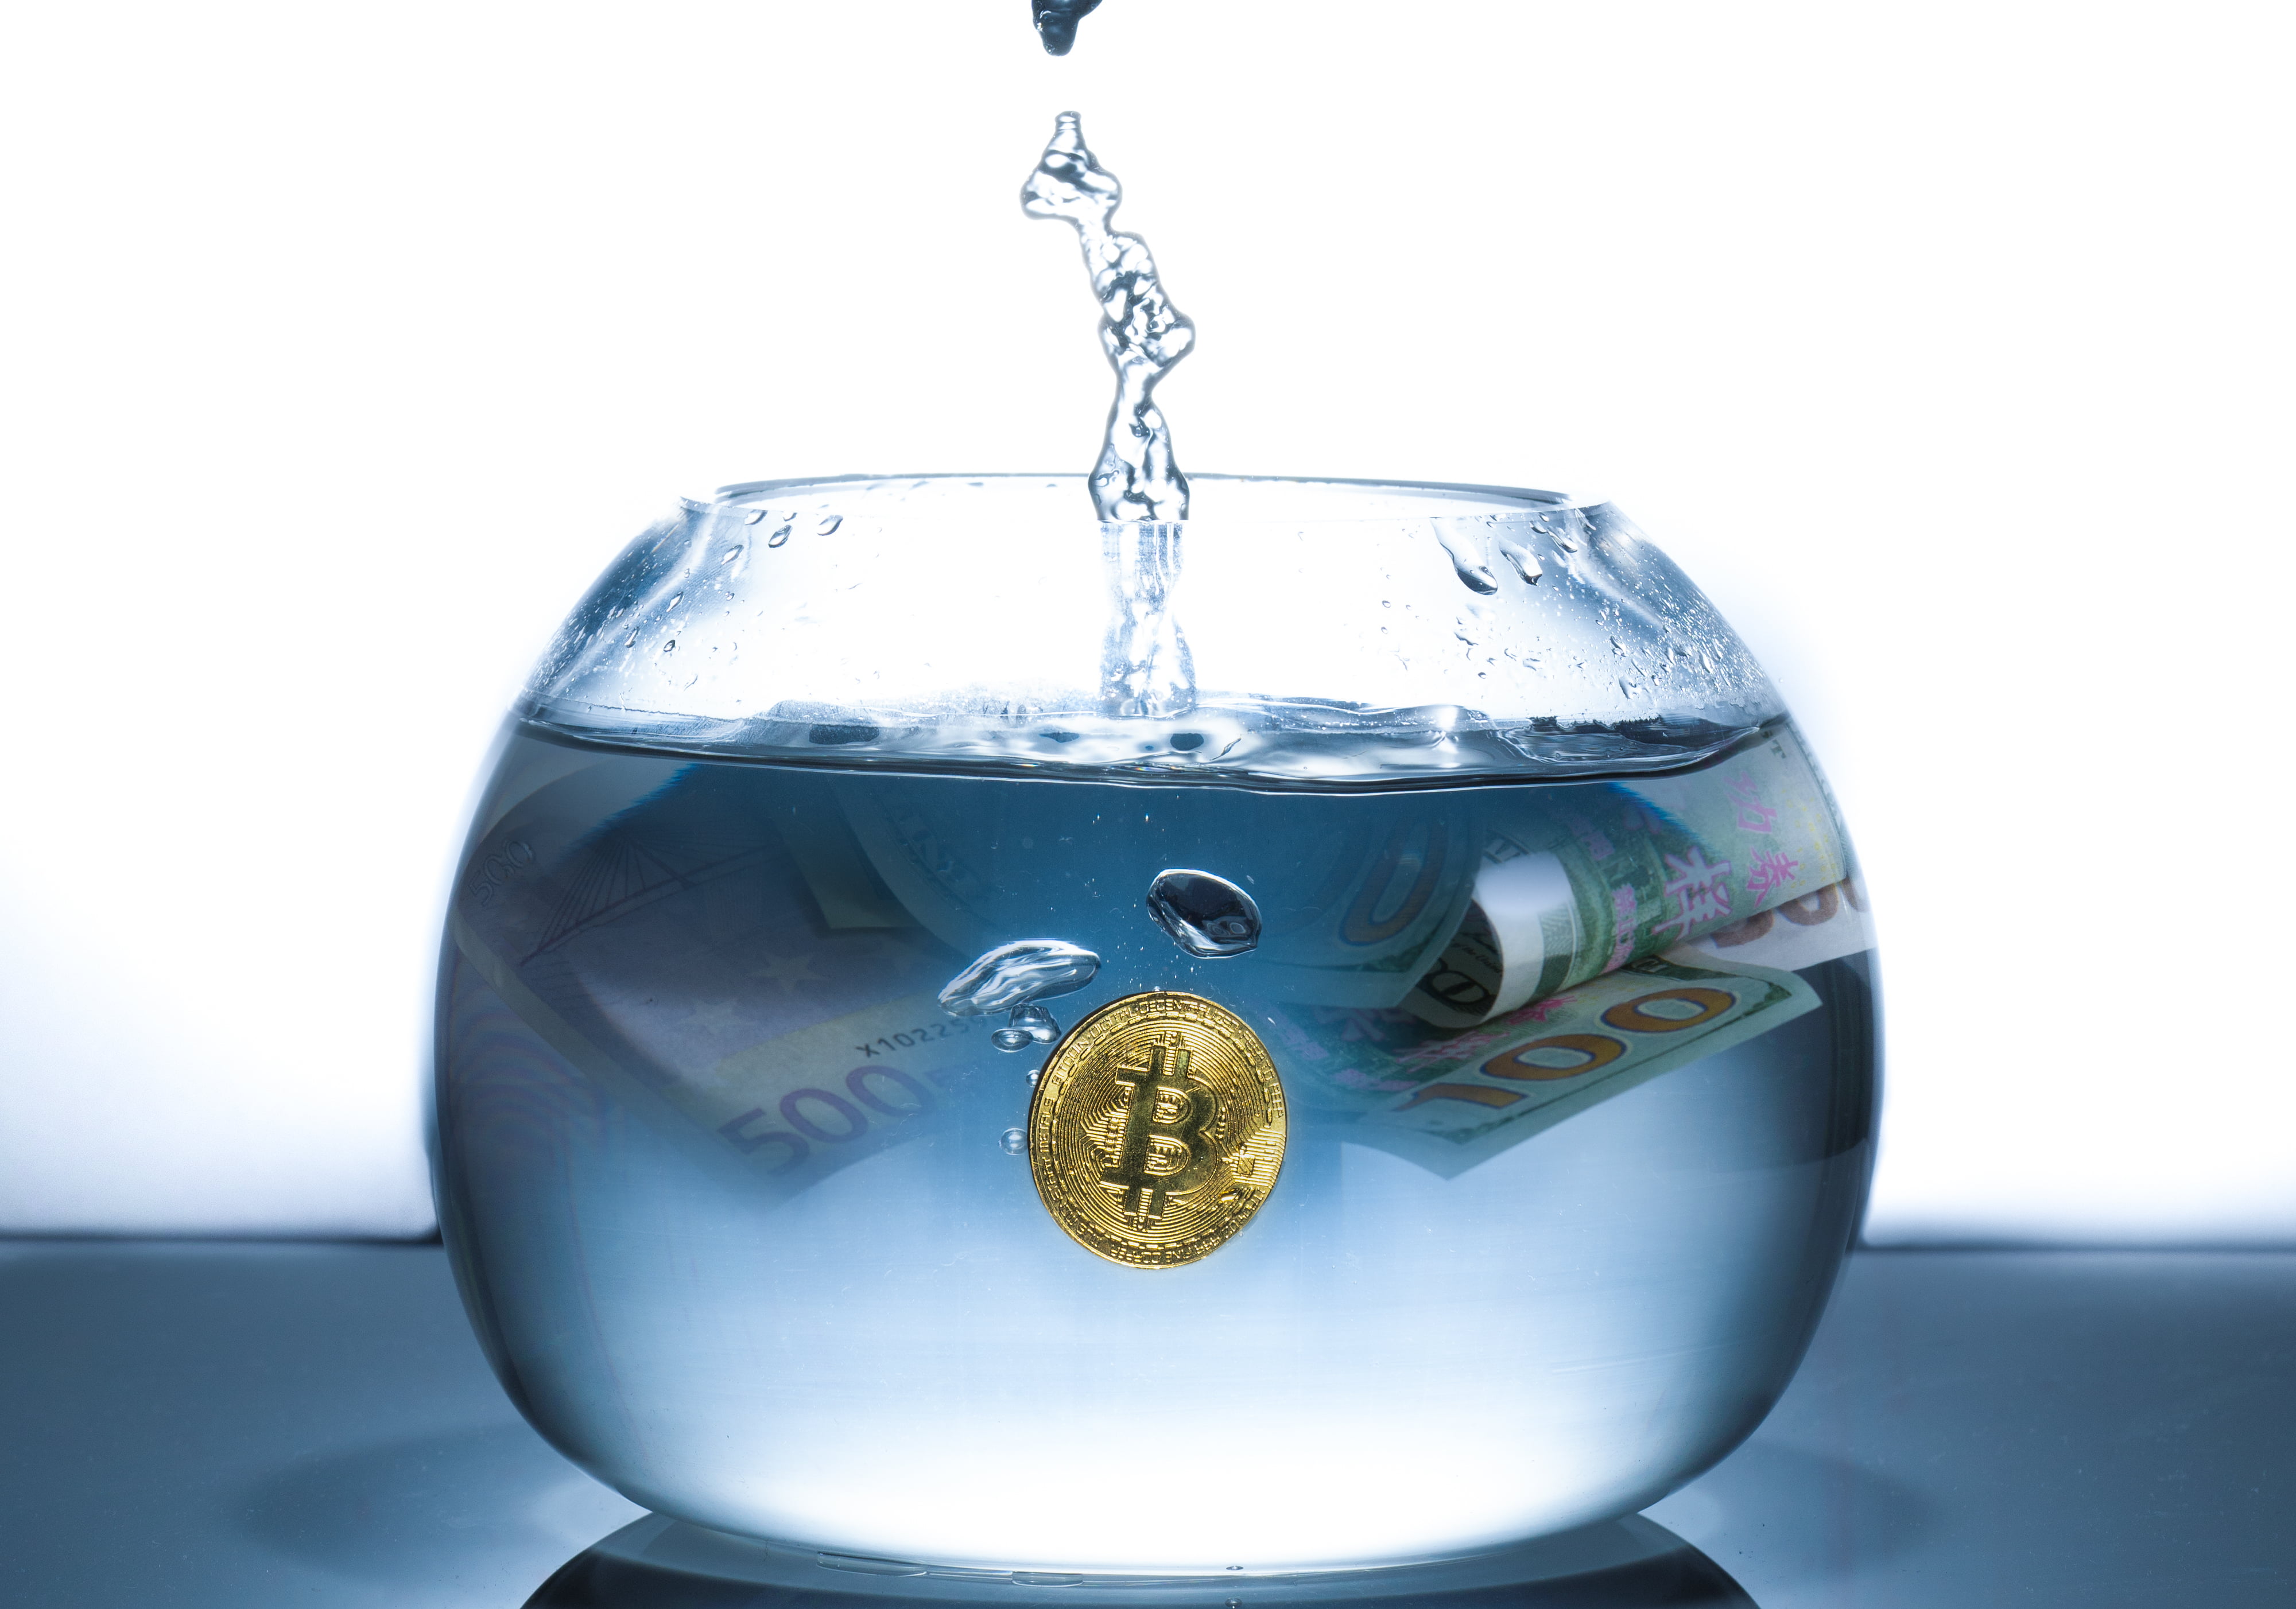 40 of bitcoin investors are underwater